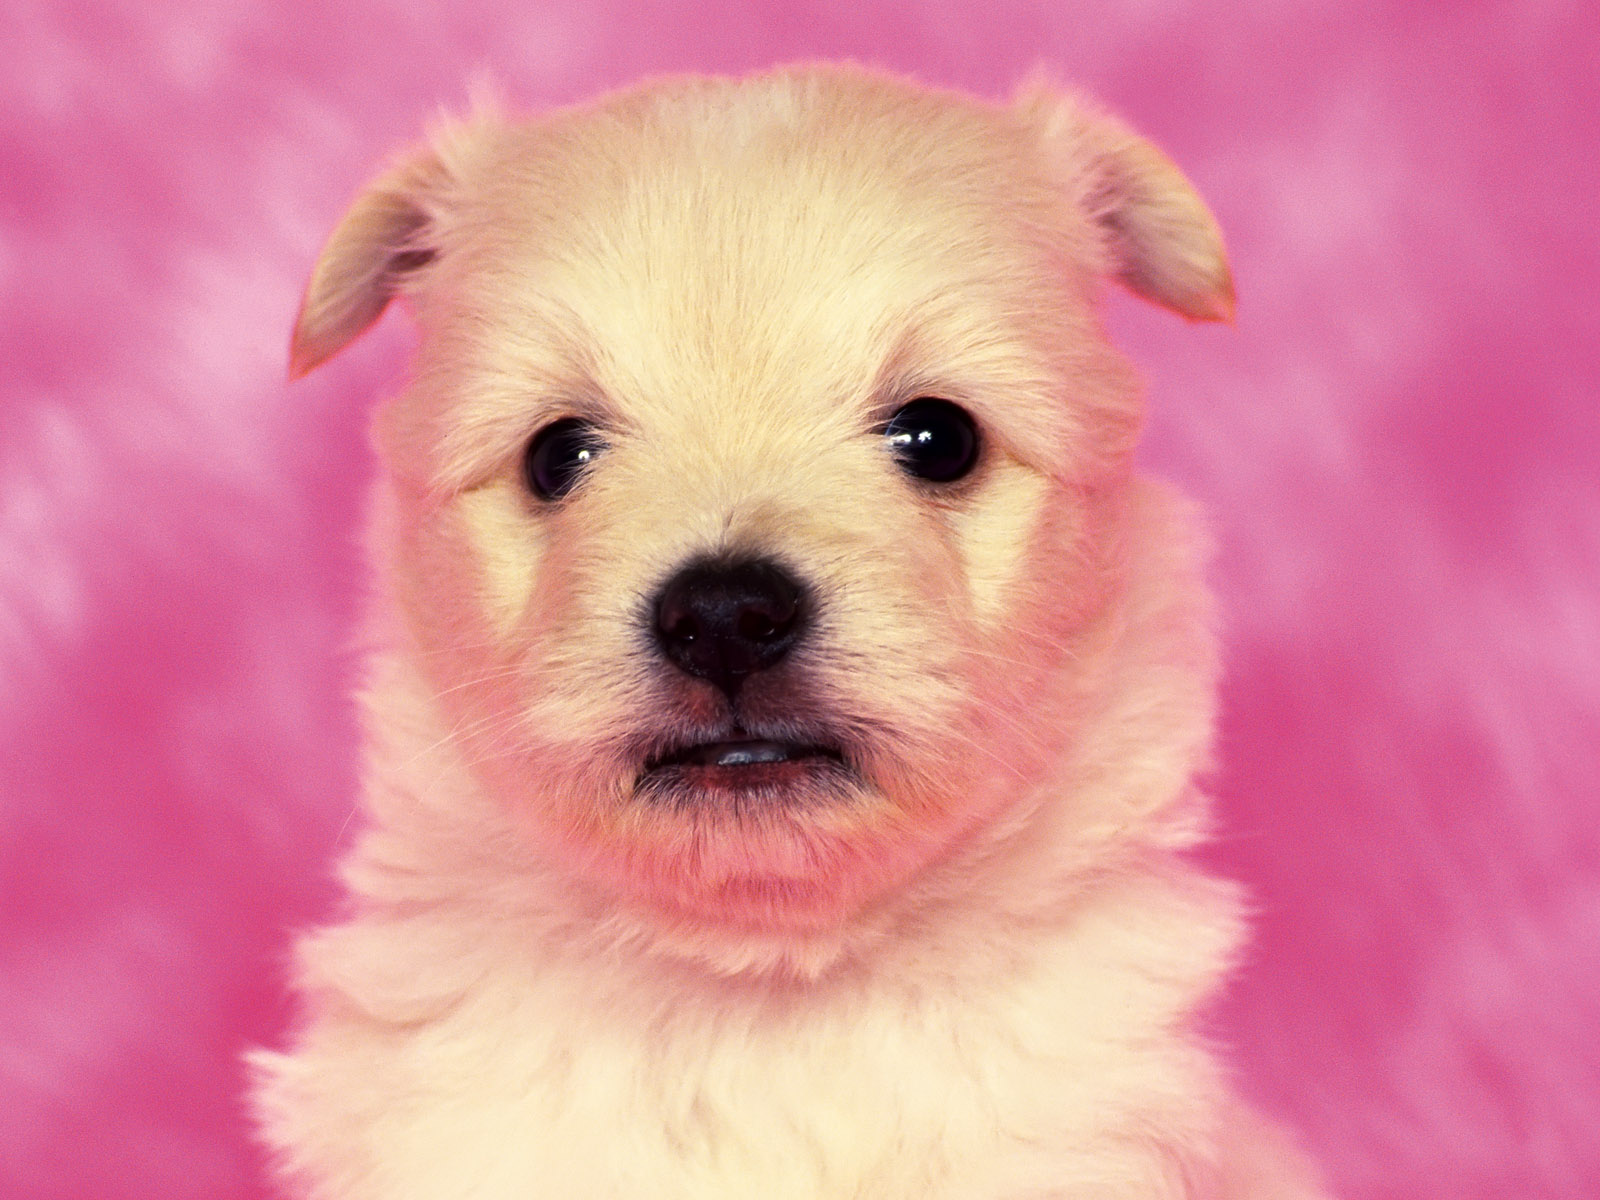 Cute Puppy Dog Wallpaper Me